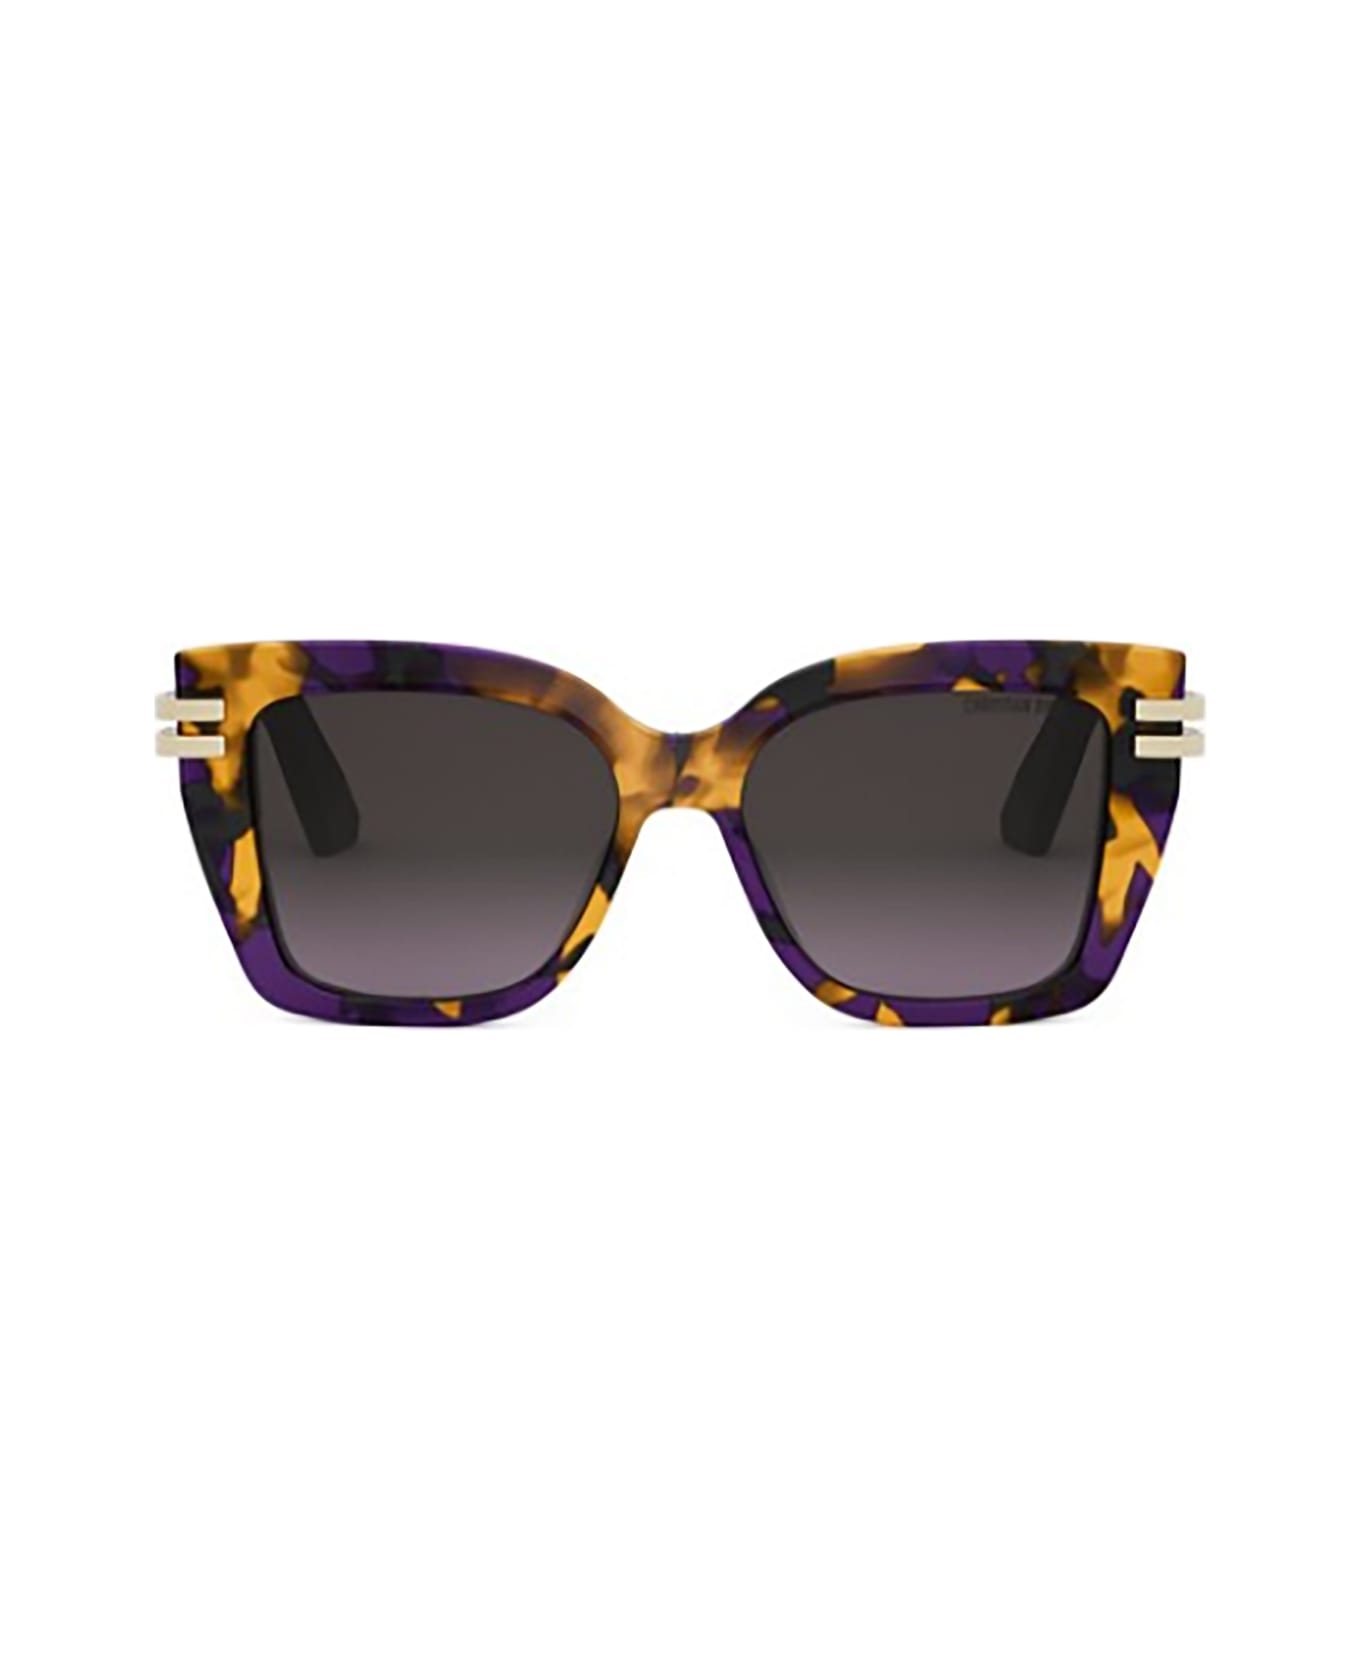 Dior CDIOR S1I Sunglasses